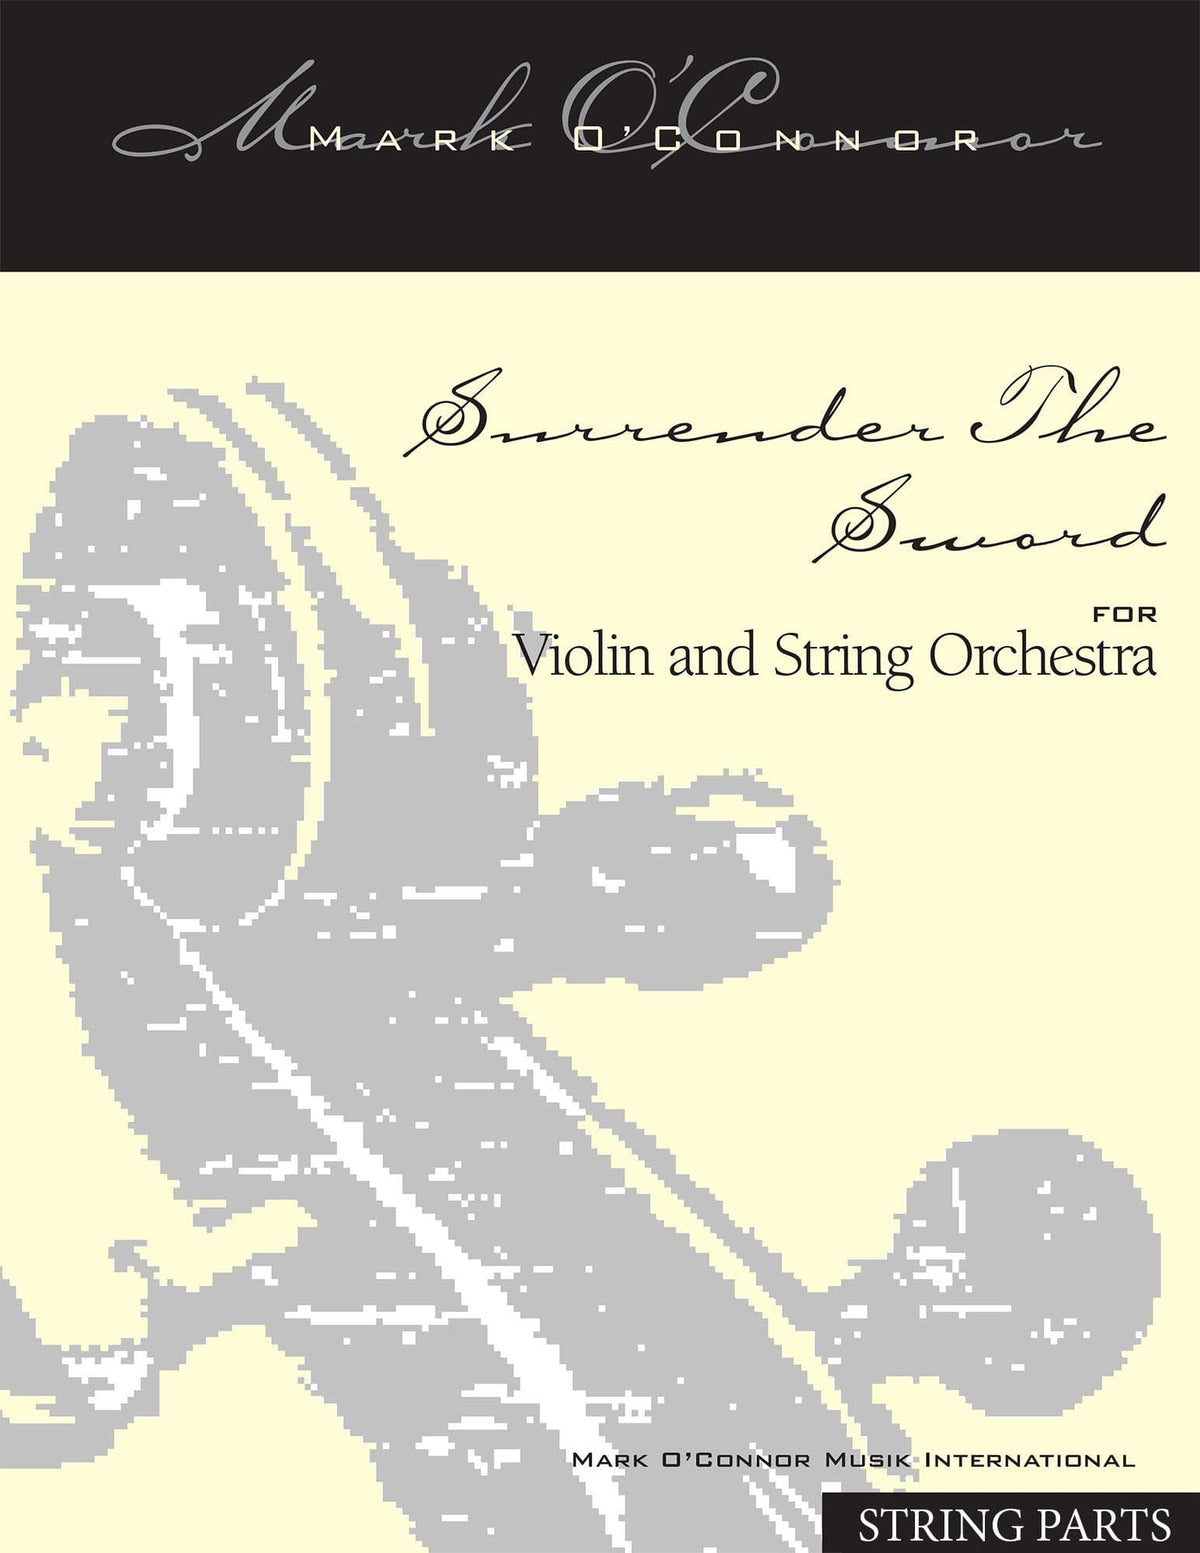 O'Connor, Mark - Surrender The Sword for Violin and String Orchestra - String Parts - Digital Download